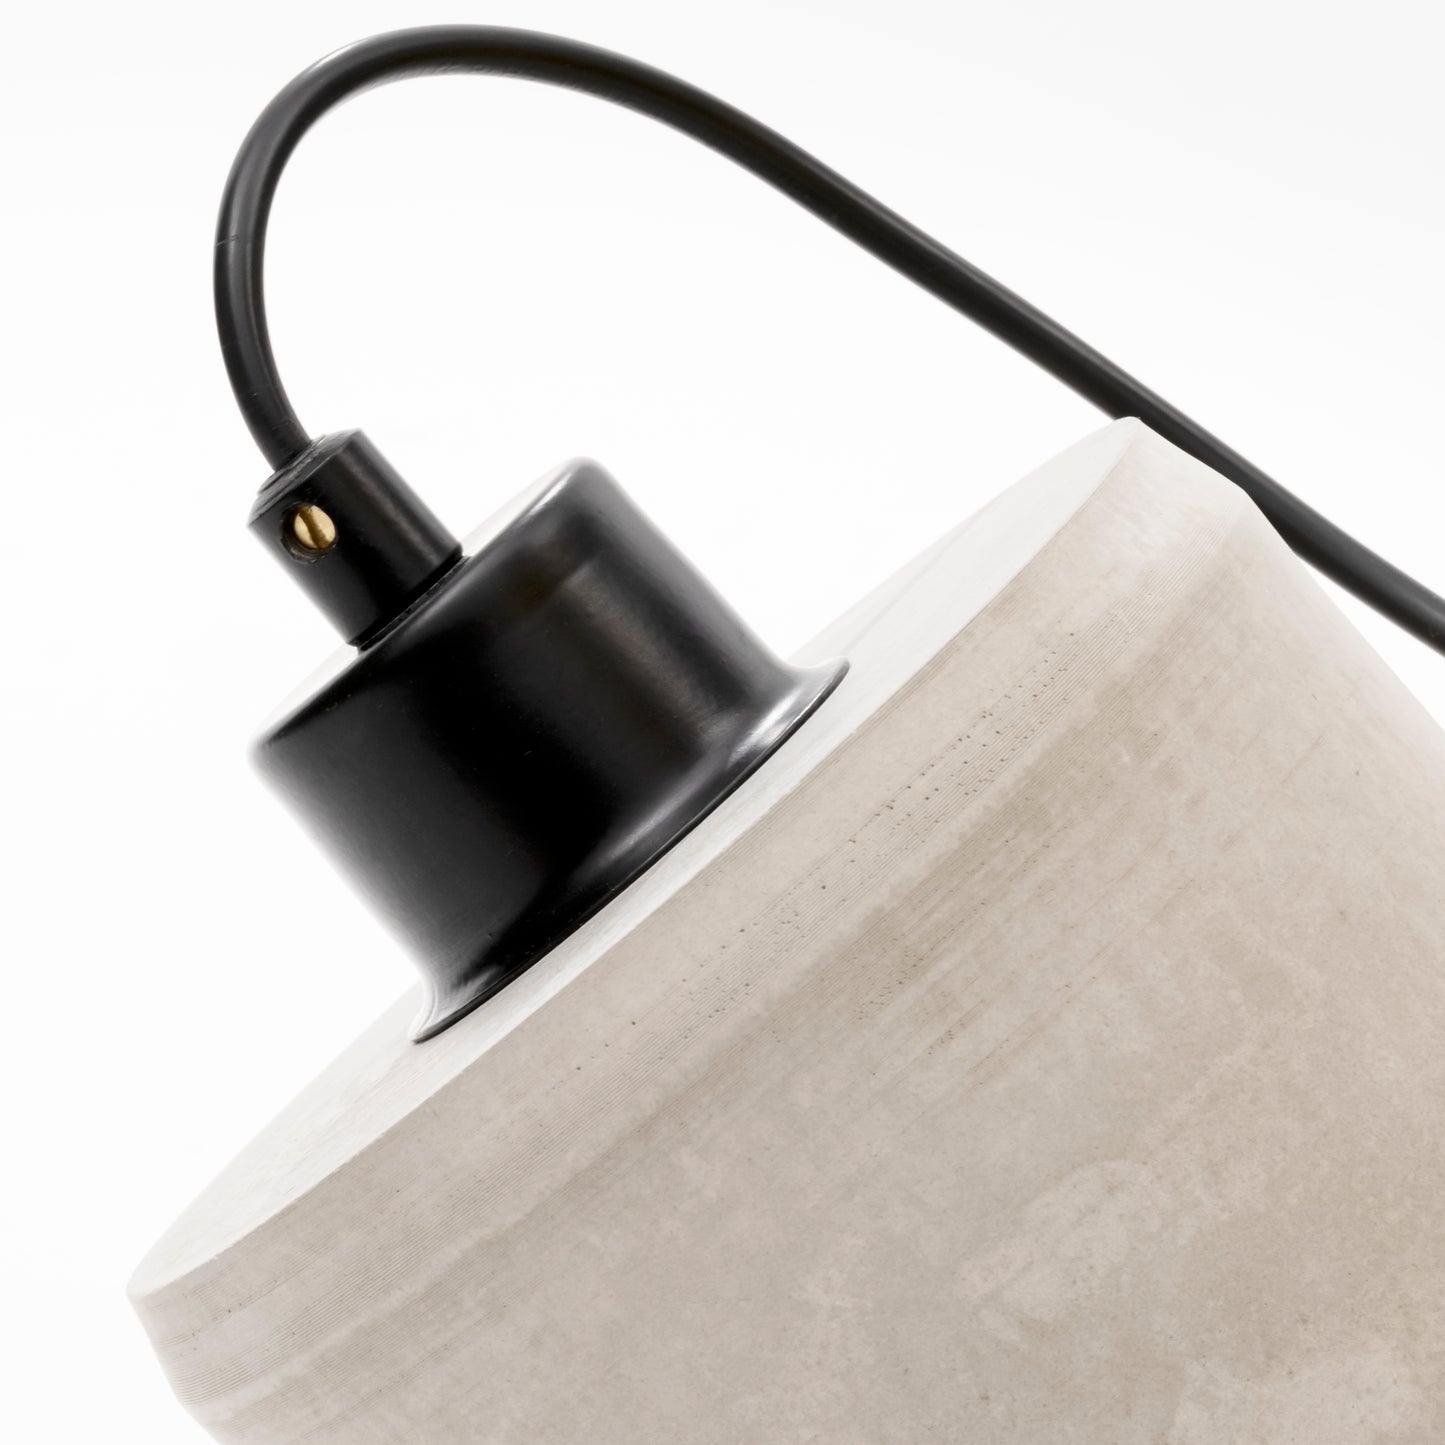 Brown Concrete Cylinder Pendant Lamp with Metal Detail, Modern Pendant Lamp